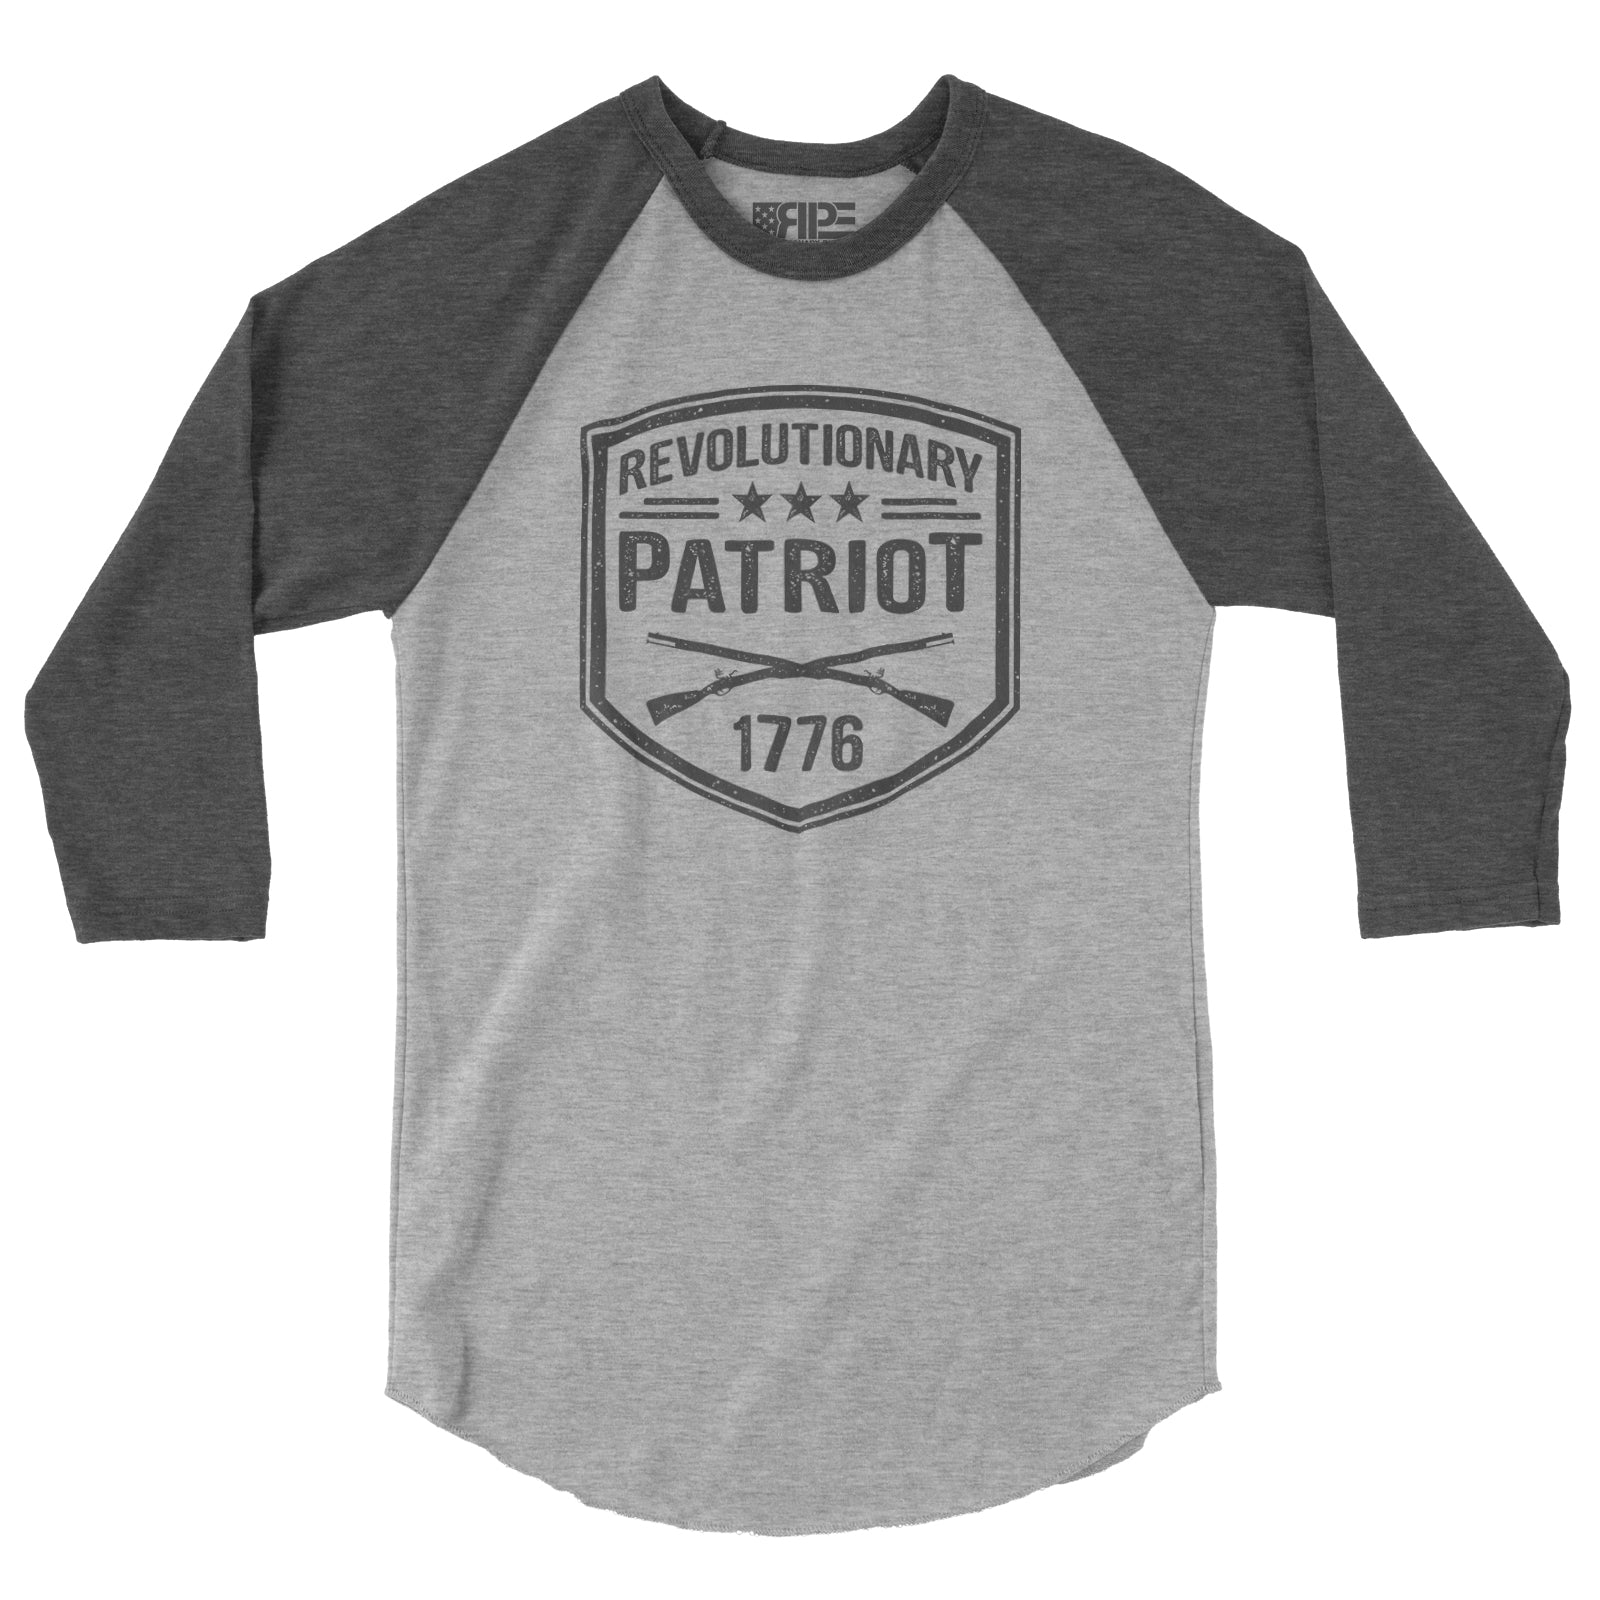 Revolutionary Patriot 3/4 Sleeve (Heather Grey / Dark Heather Grey) - Revolutionary Patriot